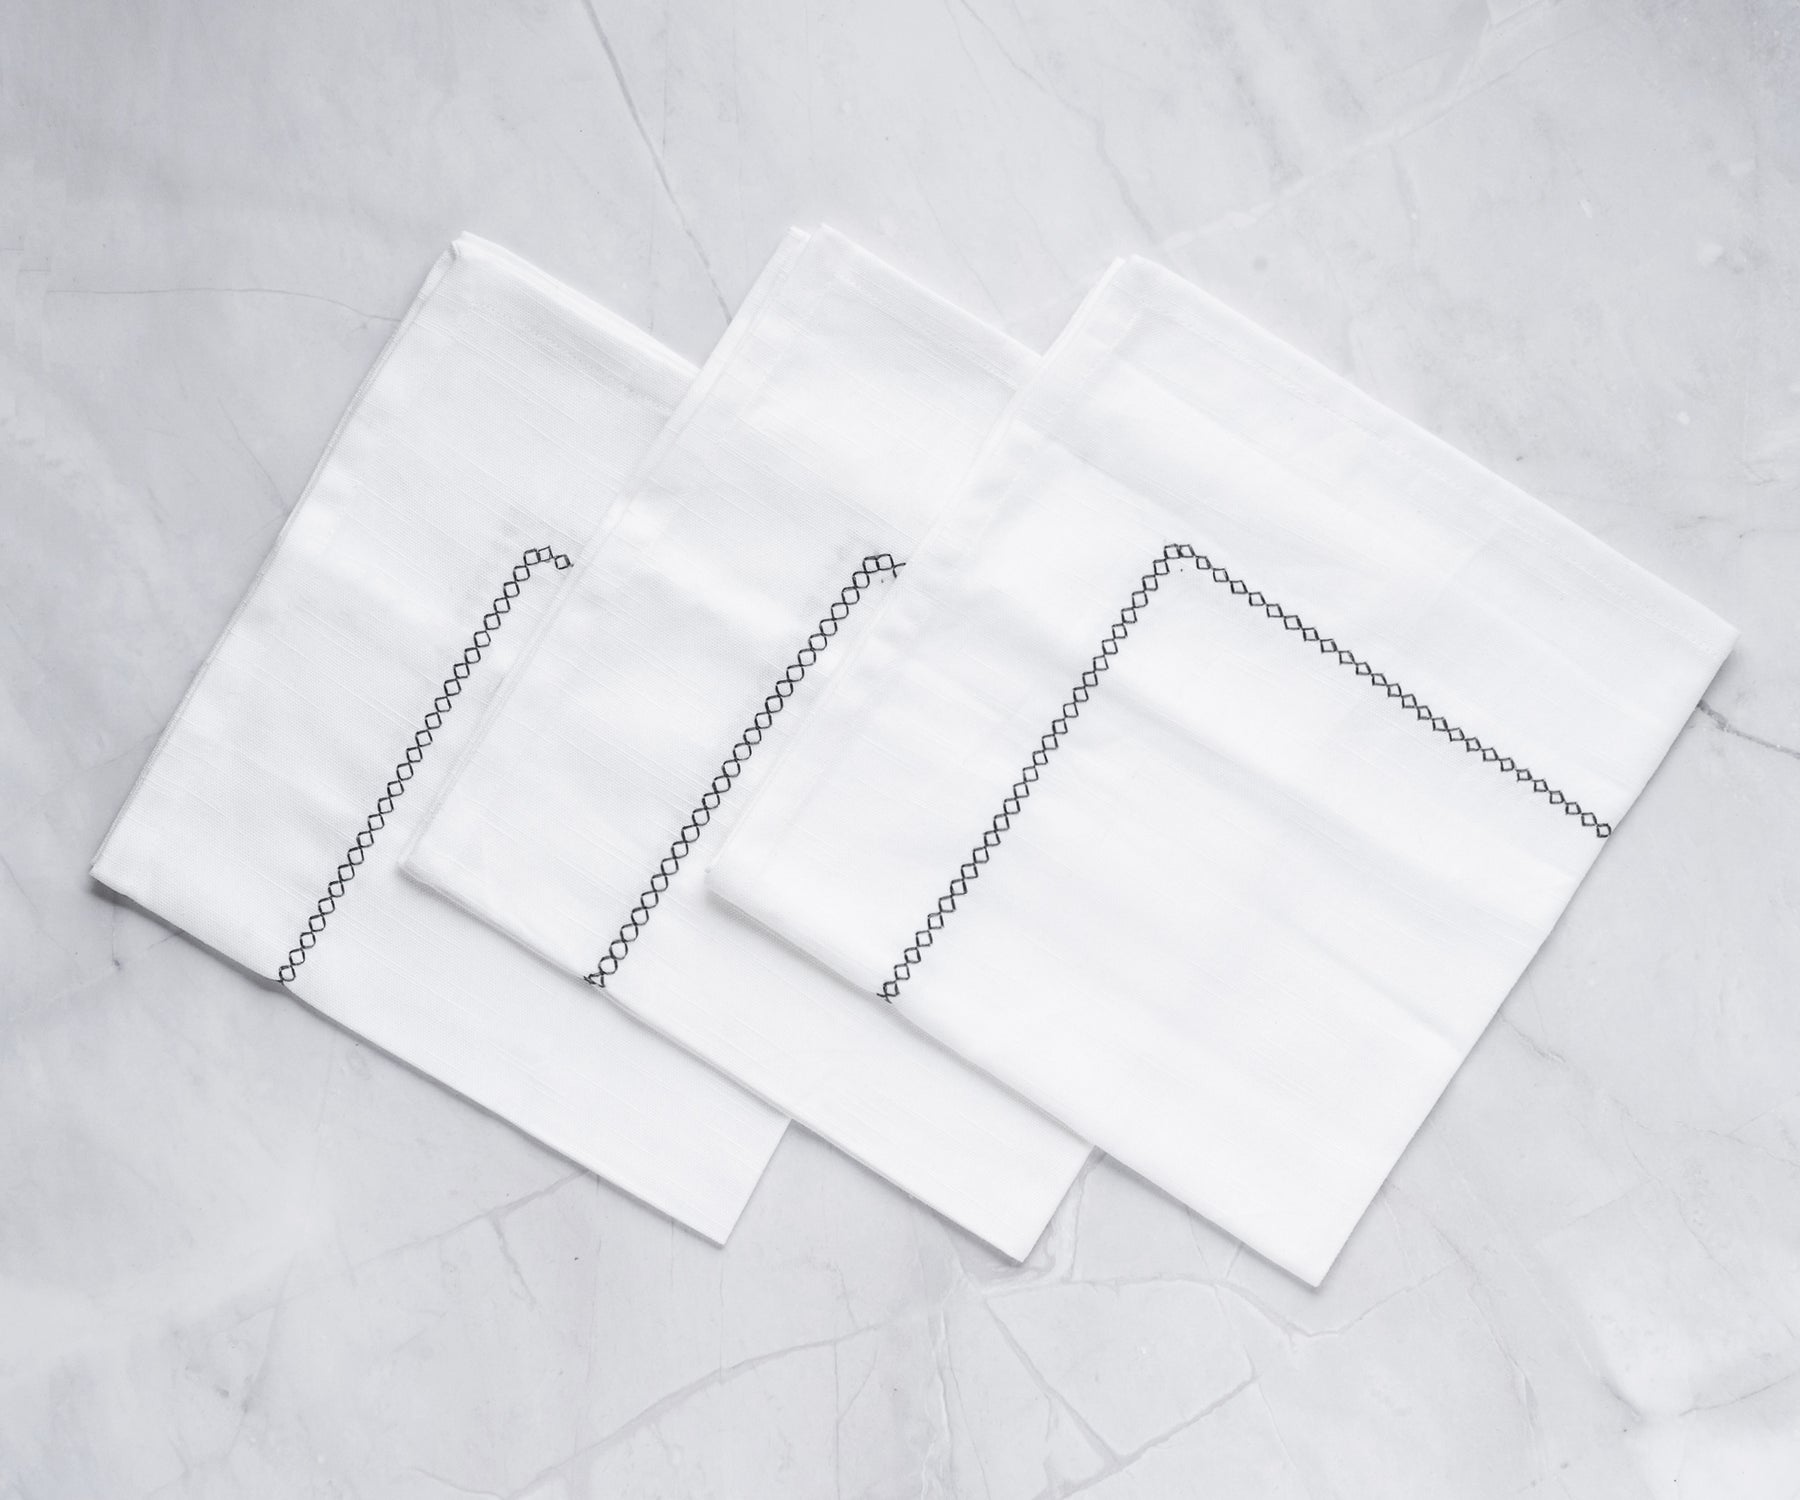 cotton napkins bulk or embroidered napkins are suitable for thanksgiving napkins. table napkin, embroidery gray napkin